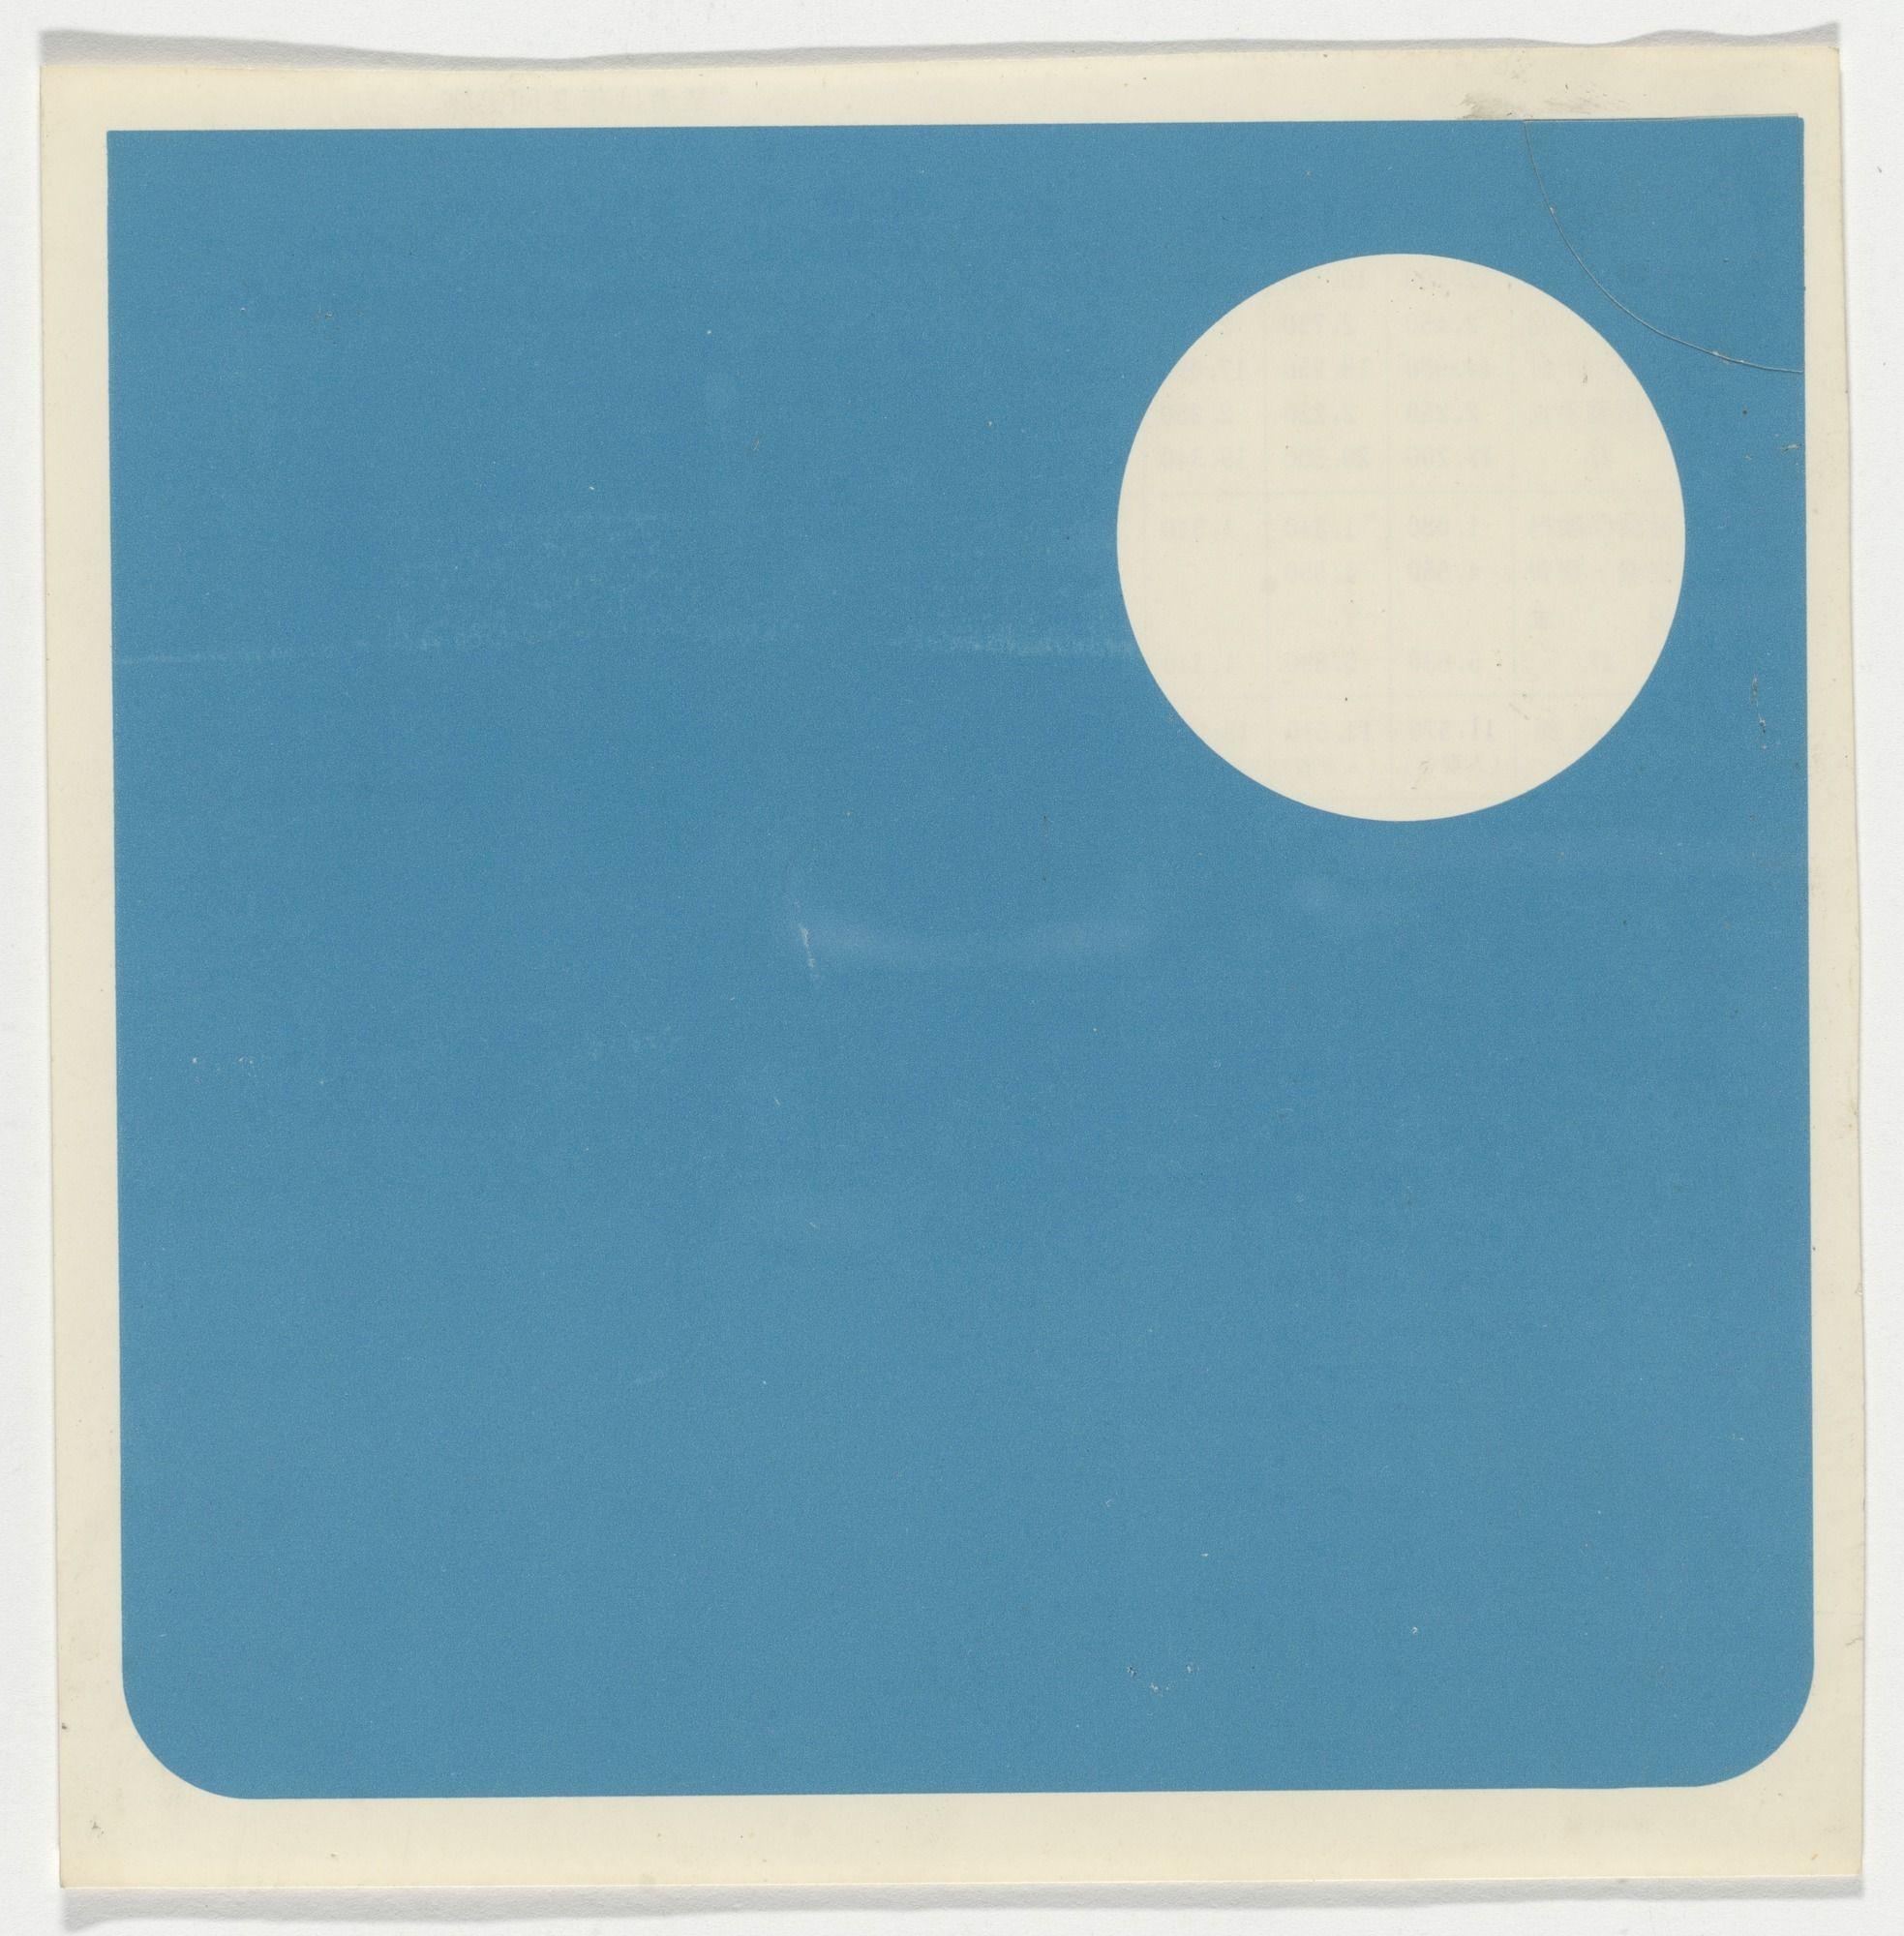 Green Rectangle With White Circles Logo - Yutaka Matsuzawa. Untitled (White Circle Collage). c. 1967